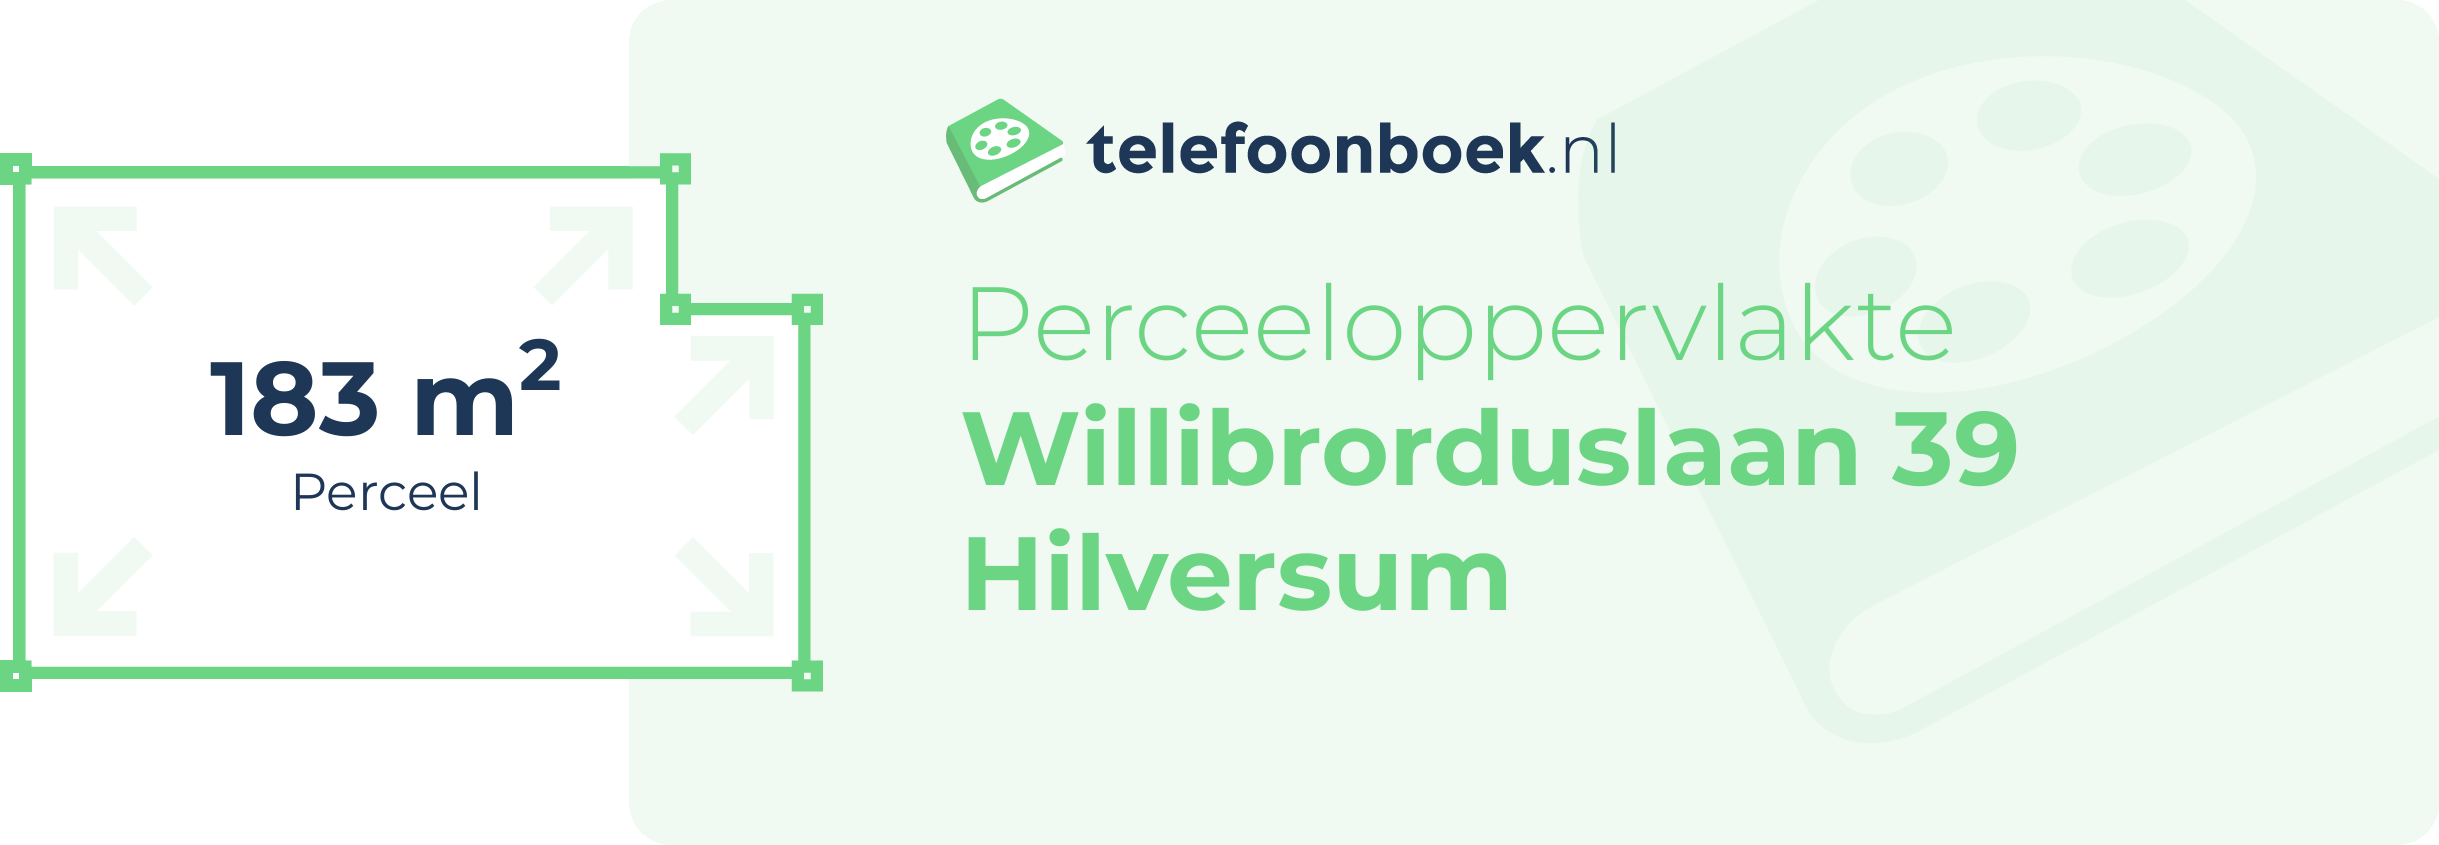 Perceeloppervlakte Willibrorduslaan 39 Hilversum